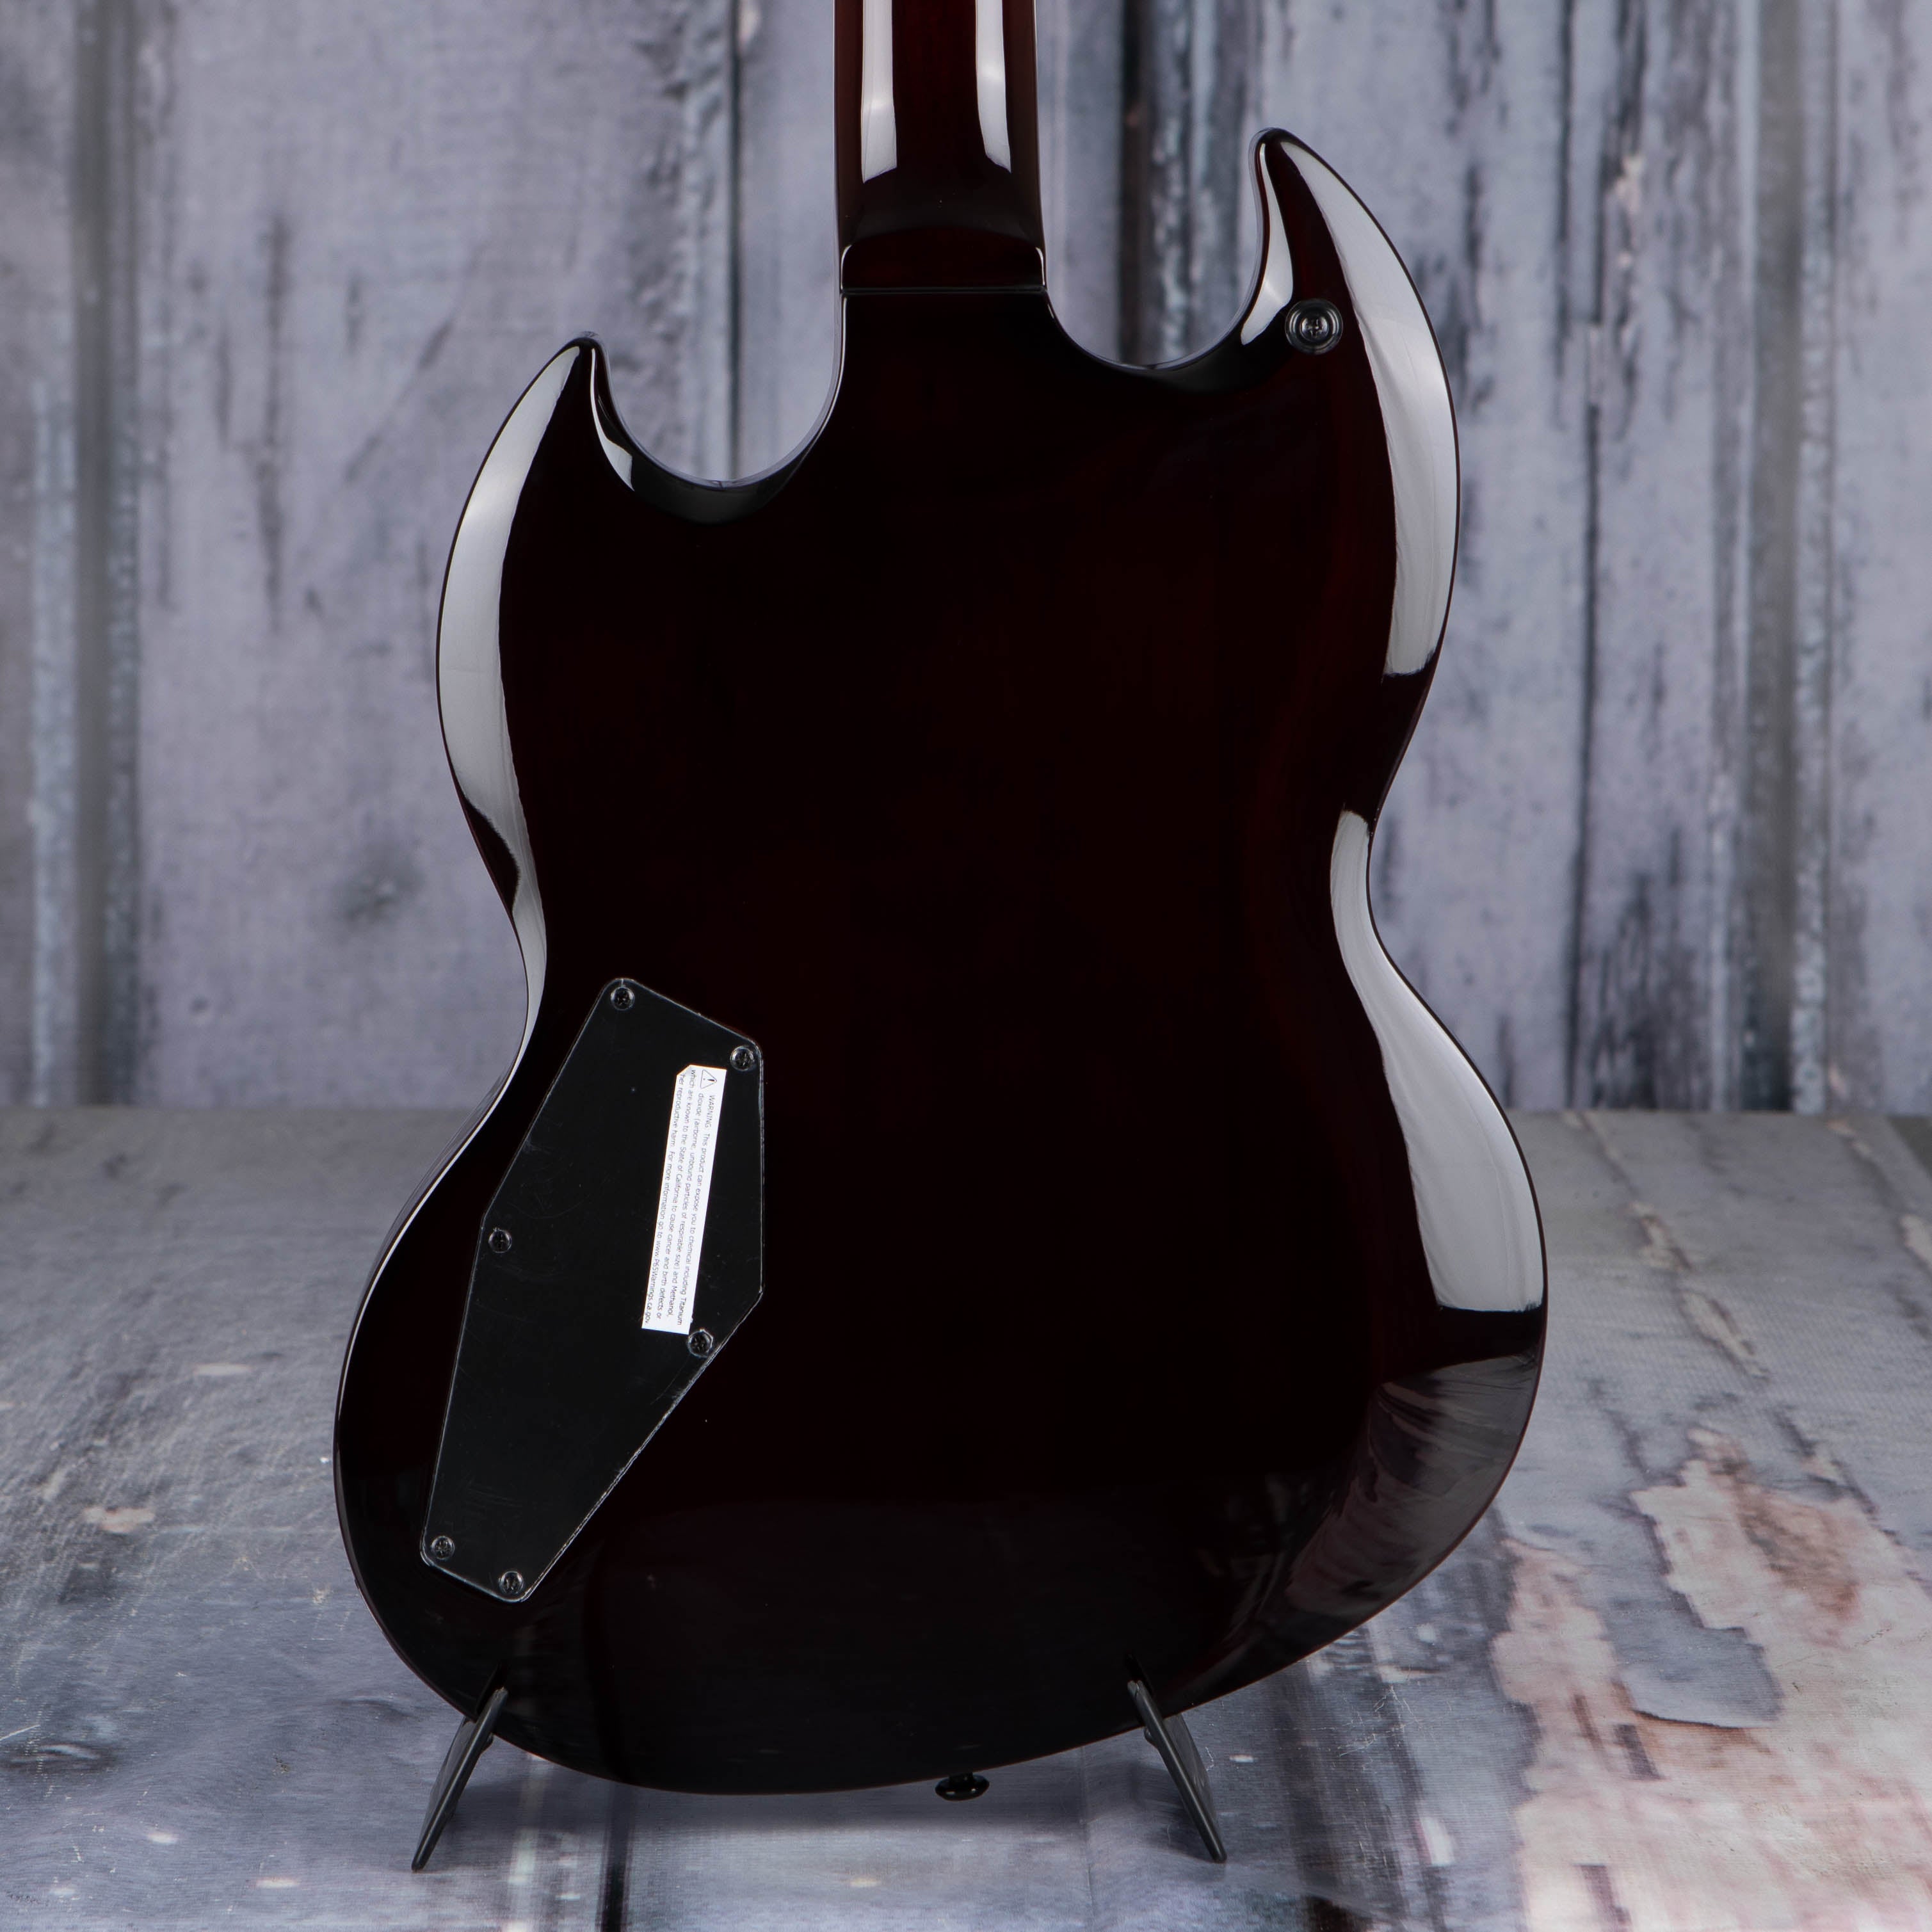 ESP LTD Viper-256 Electric Guitar, Dark Brown Sunburst, back closeup